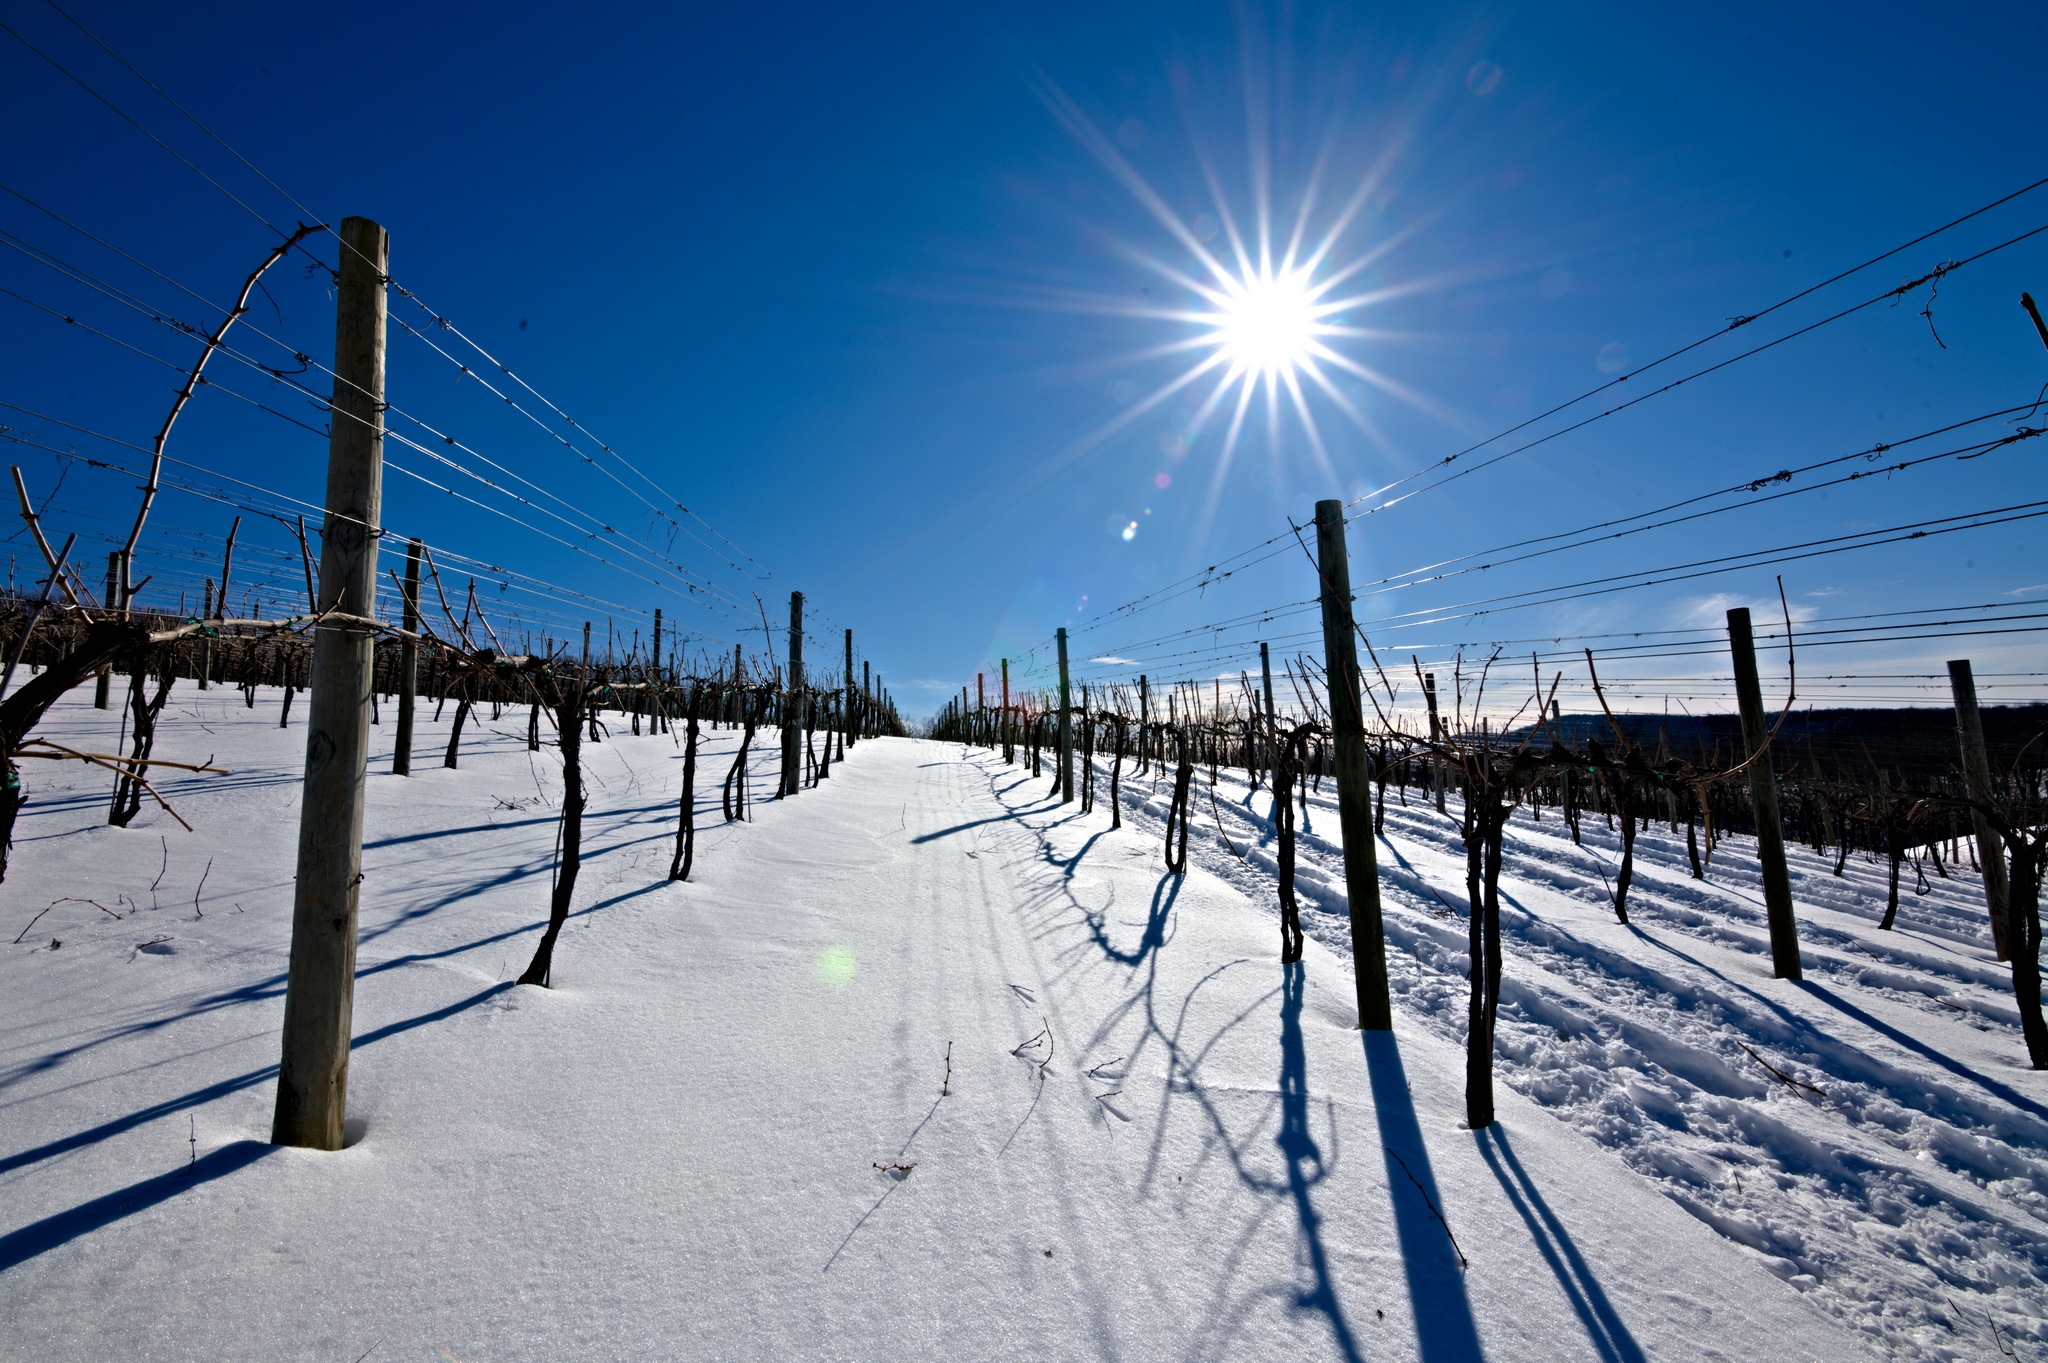 Winter vines with snow with sunburst